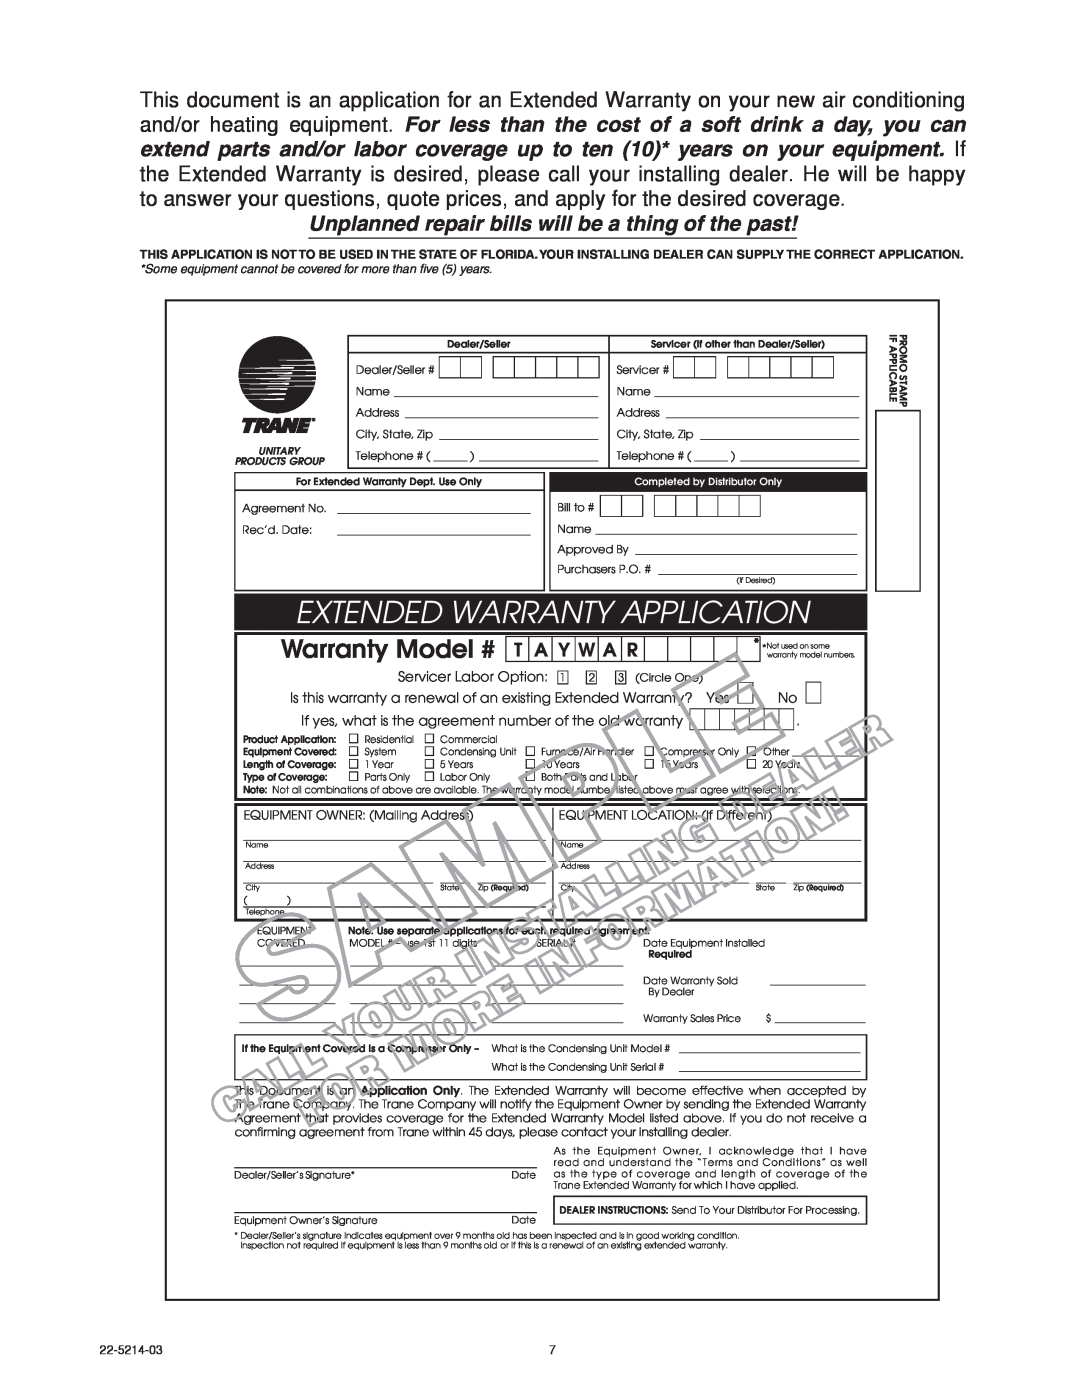 Trane 22-5214-03 manual Extended Warranty Application, Warranty Model #, Servicer Labor Option 